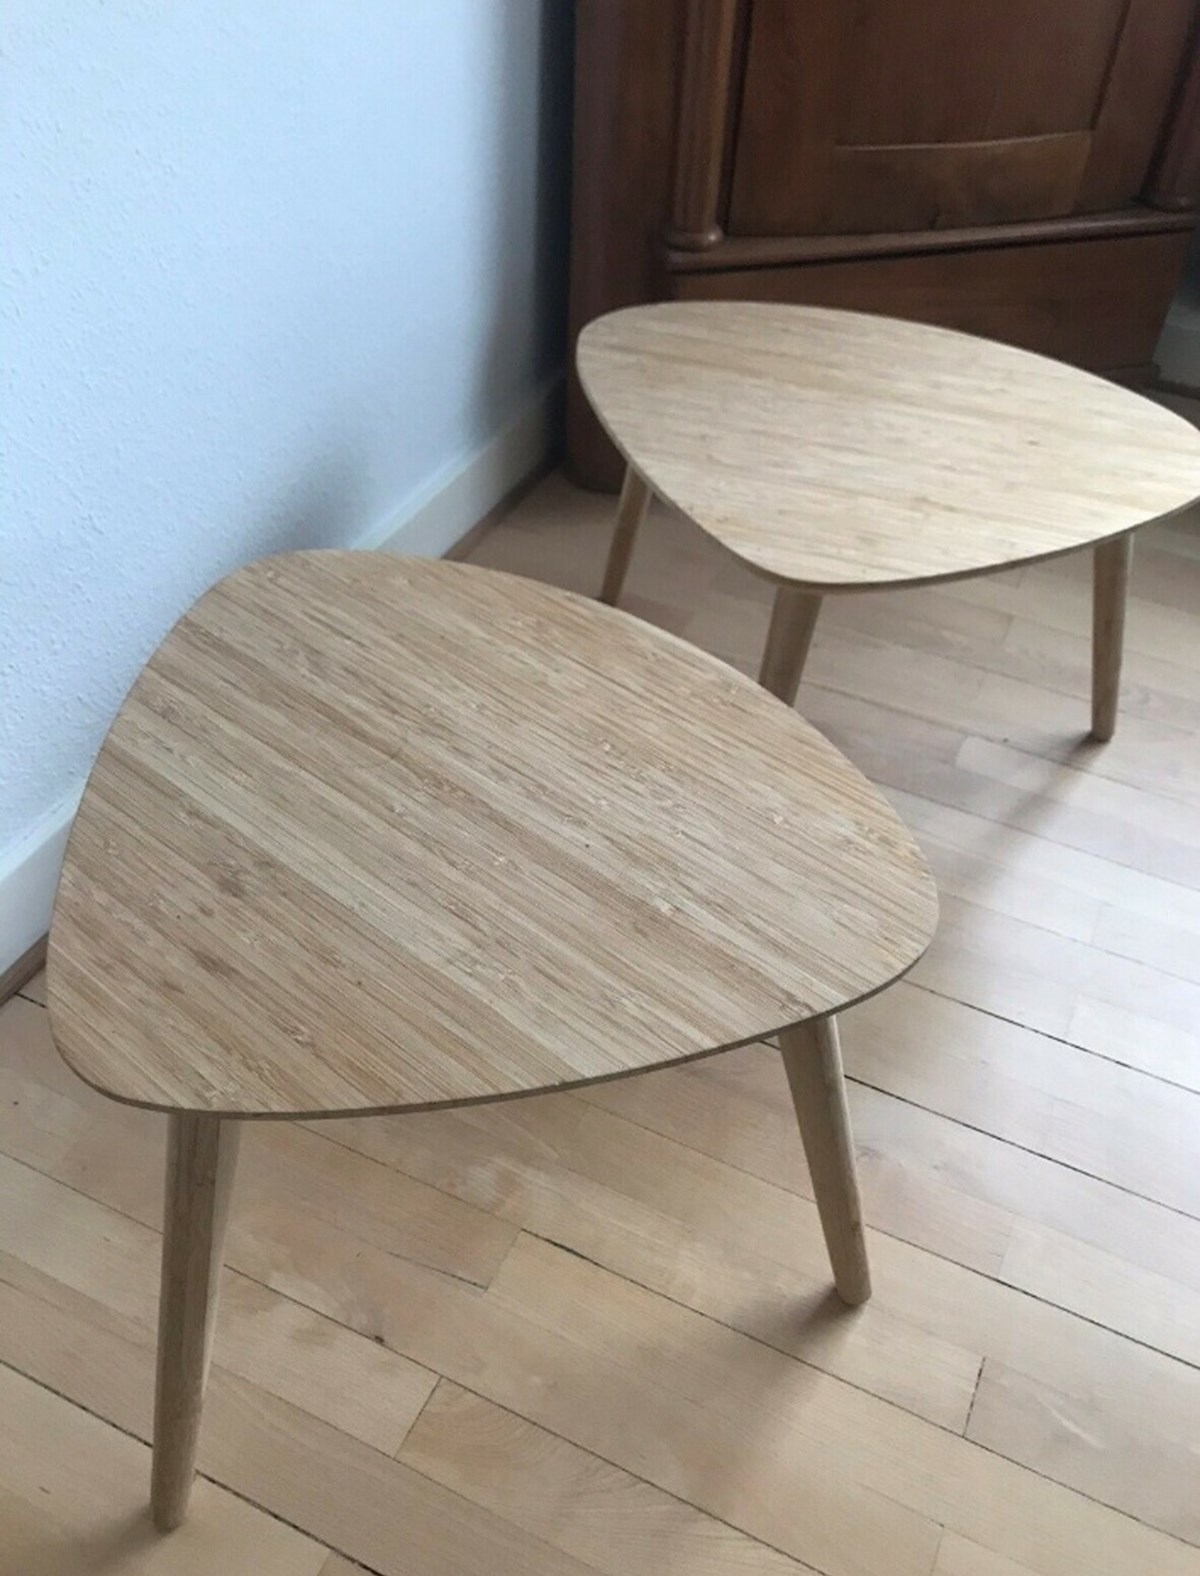 Henrik fra København Ø har sat disse to sofaborde til salg på DBA for 249 kroner. Bordene er inskudsborde, og de er opført i bambus